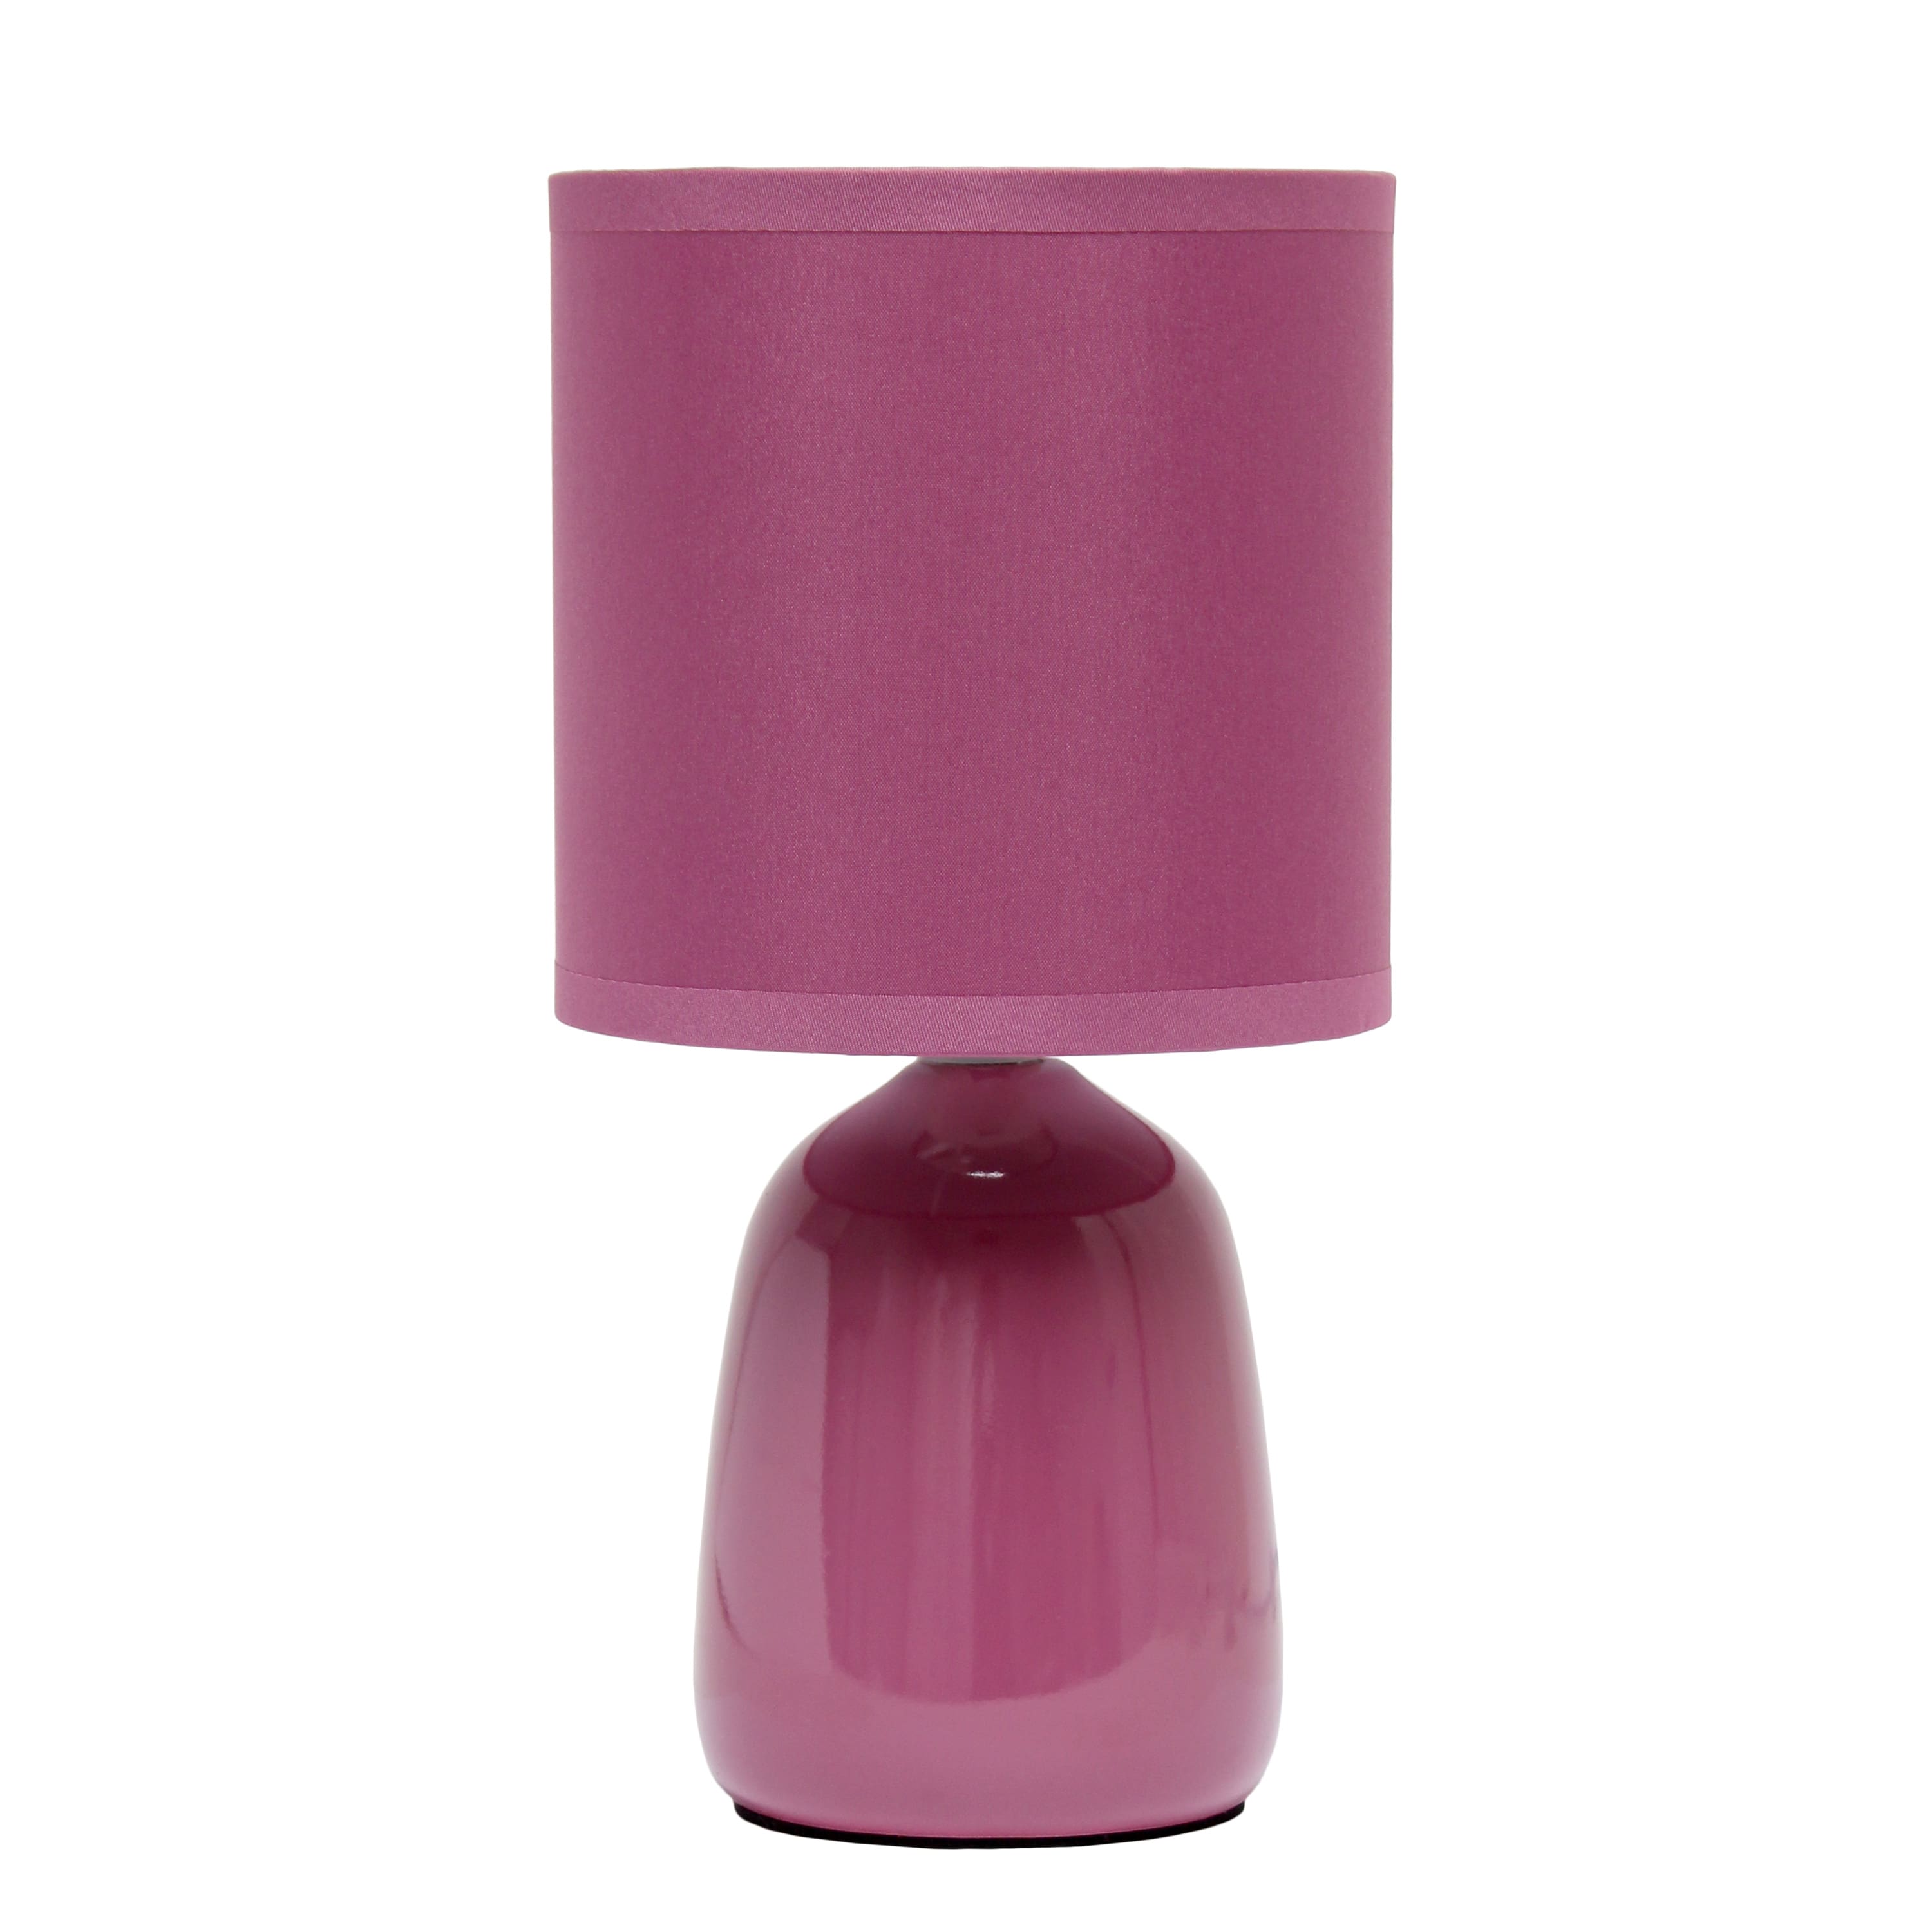 Simple Designs 10" Thimble Base Ceramic Table Lamp